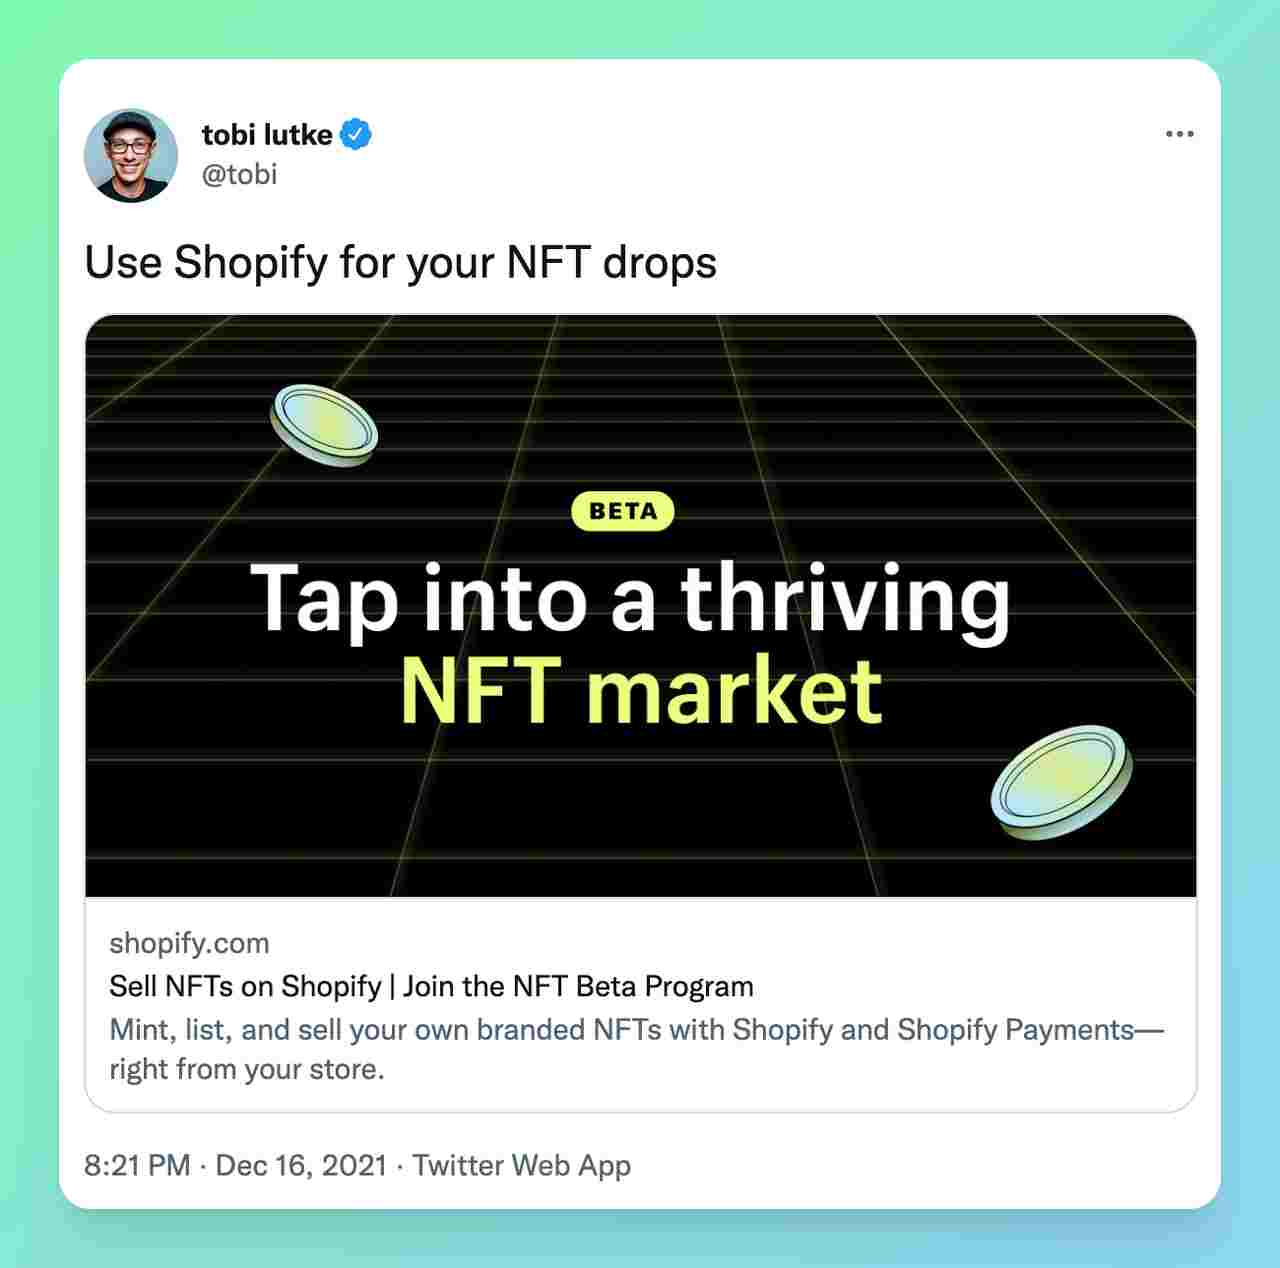 Tobias Lutke Tweeting and introducing the Shopify NFT platform